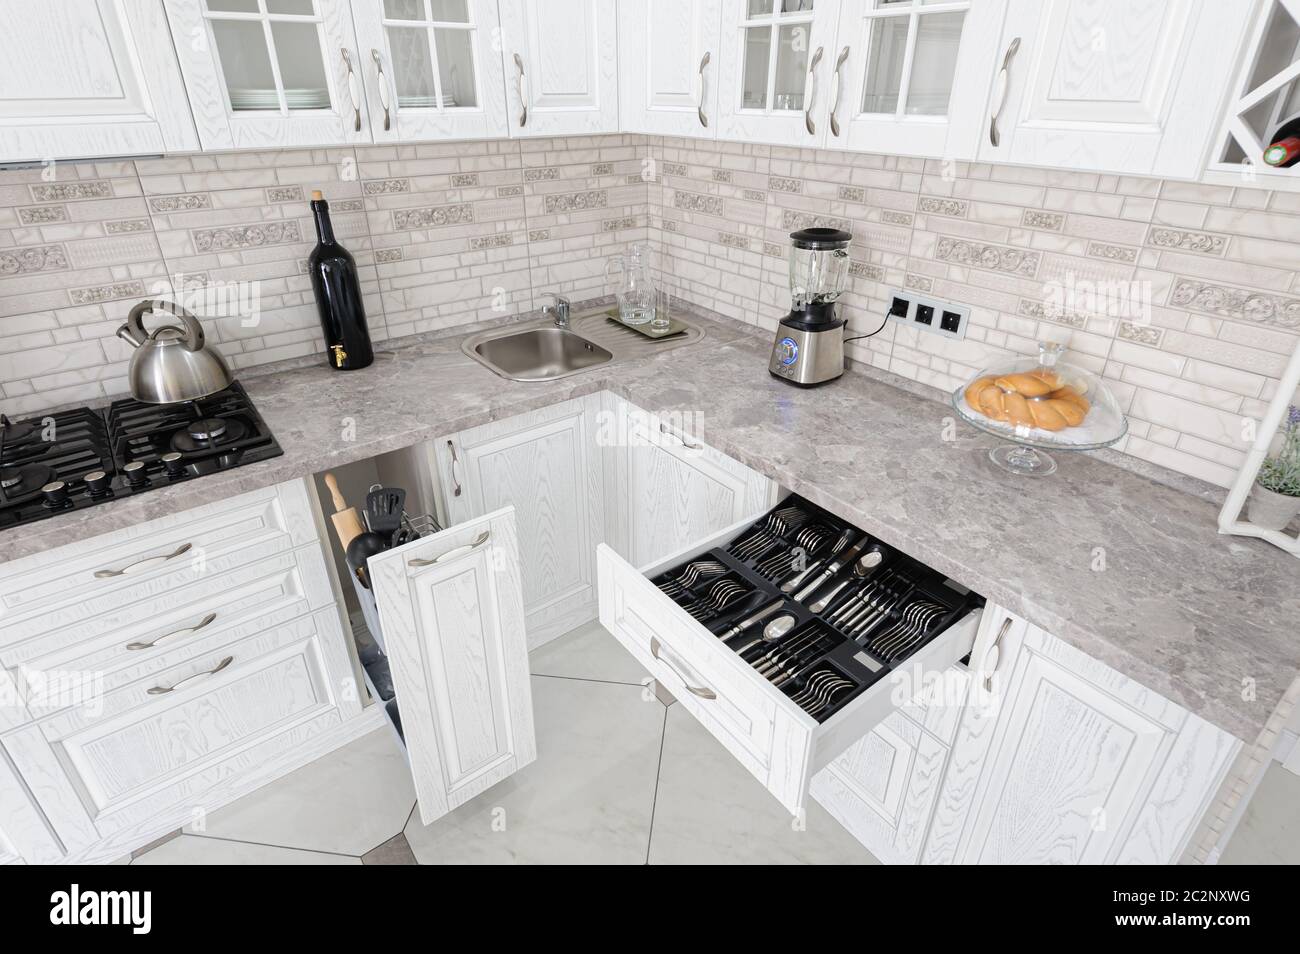 modern white wooden kitchen interior Stock Photo